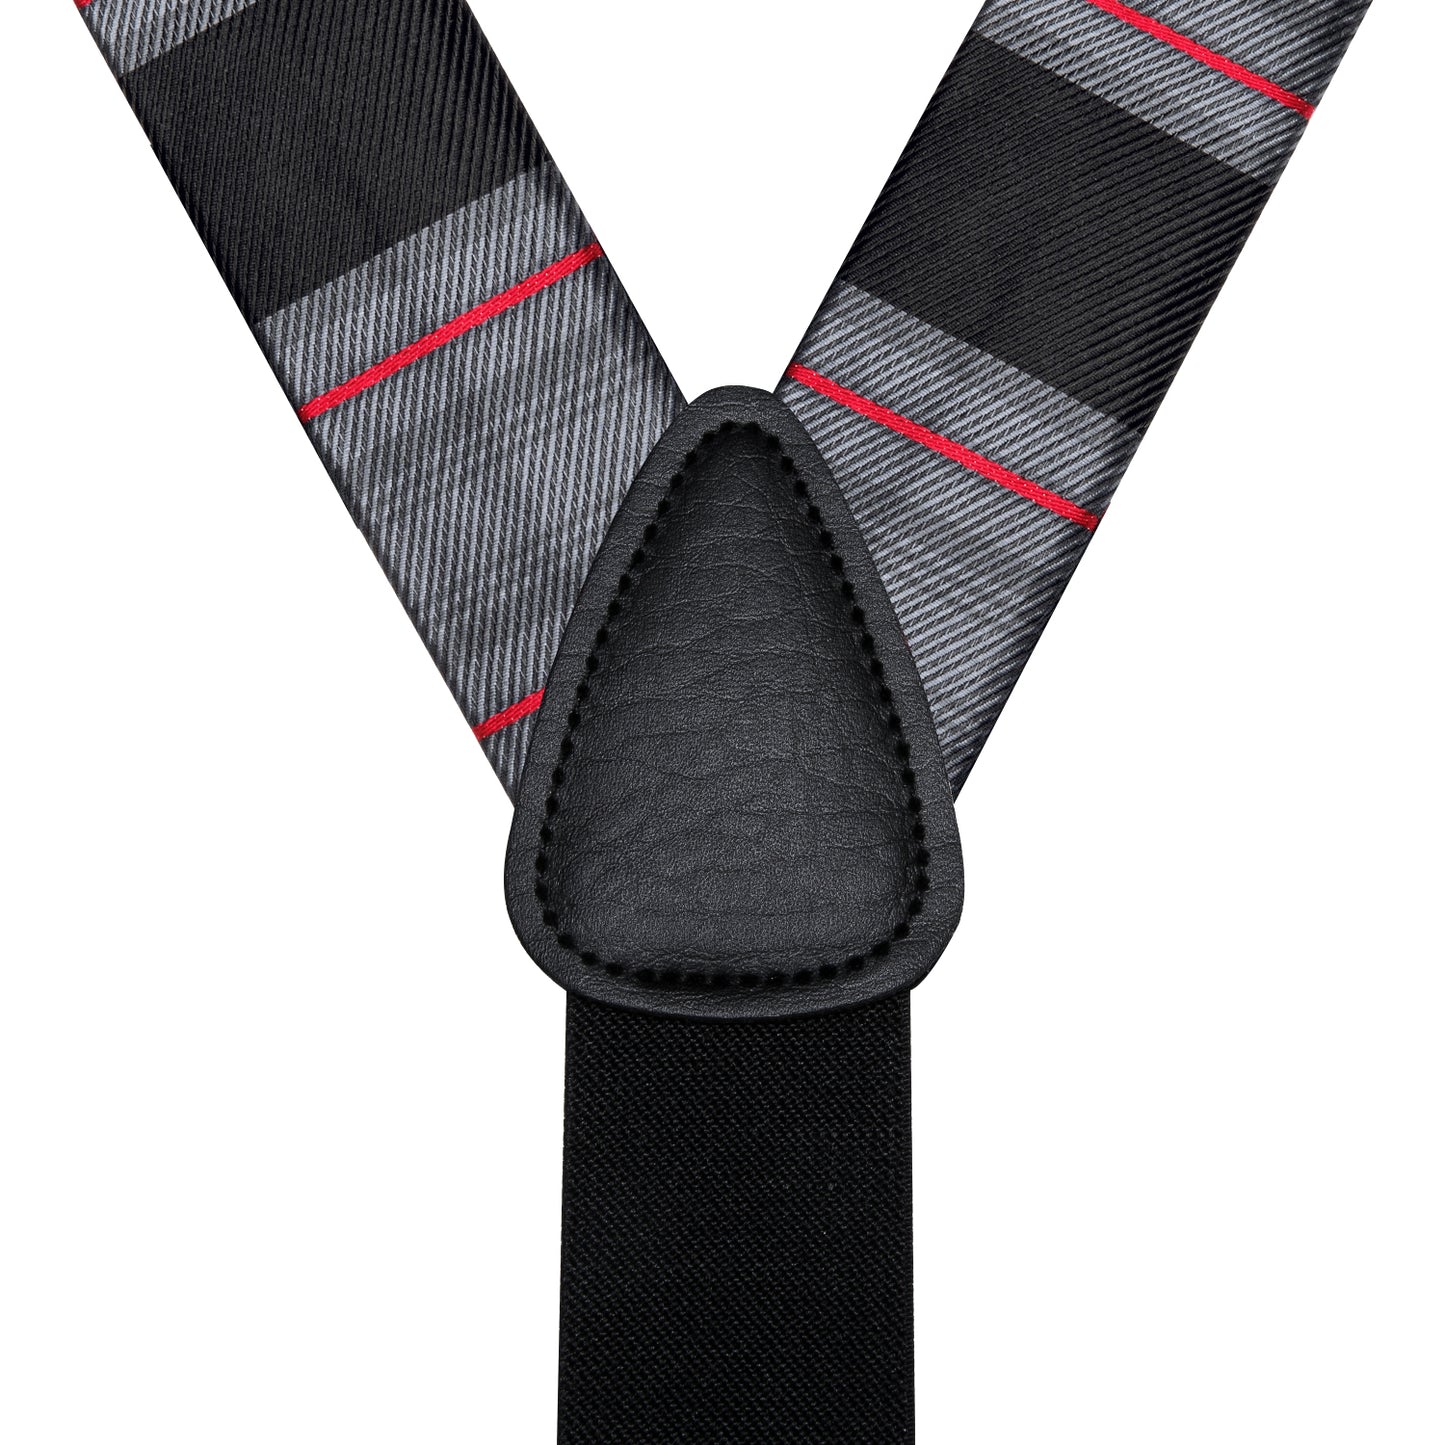 BD3004 Men's Braces Designer Clip Suspender Set [Dark Tartan]